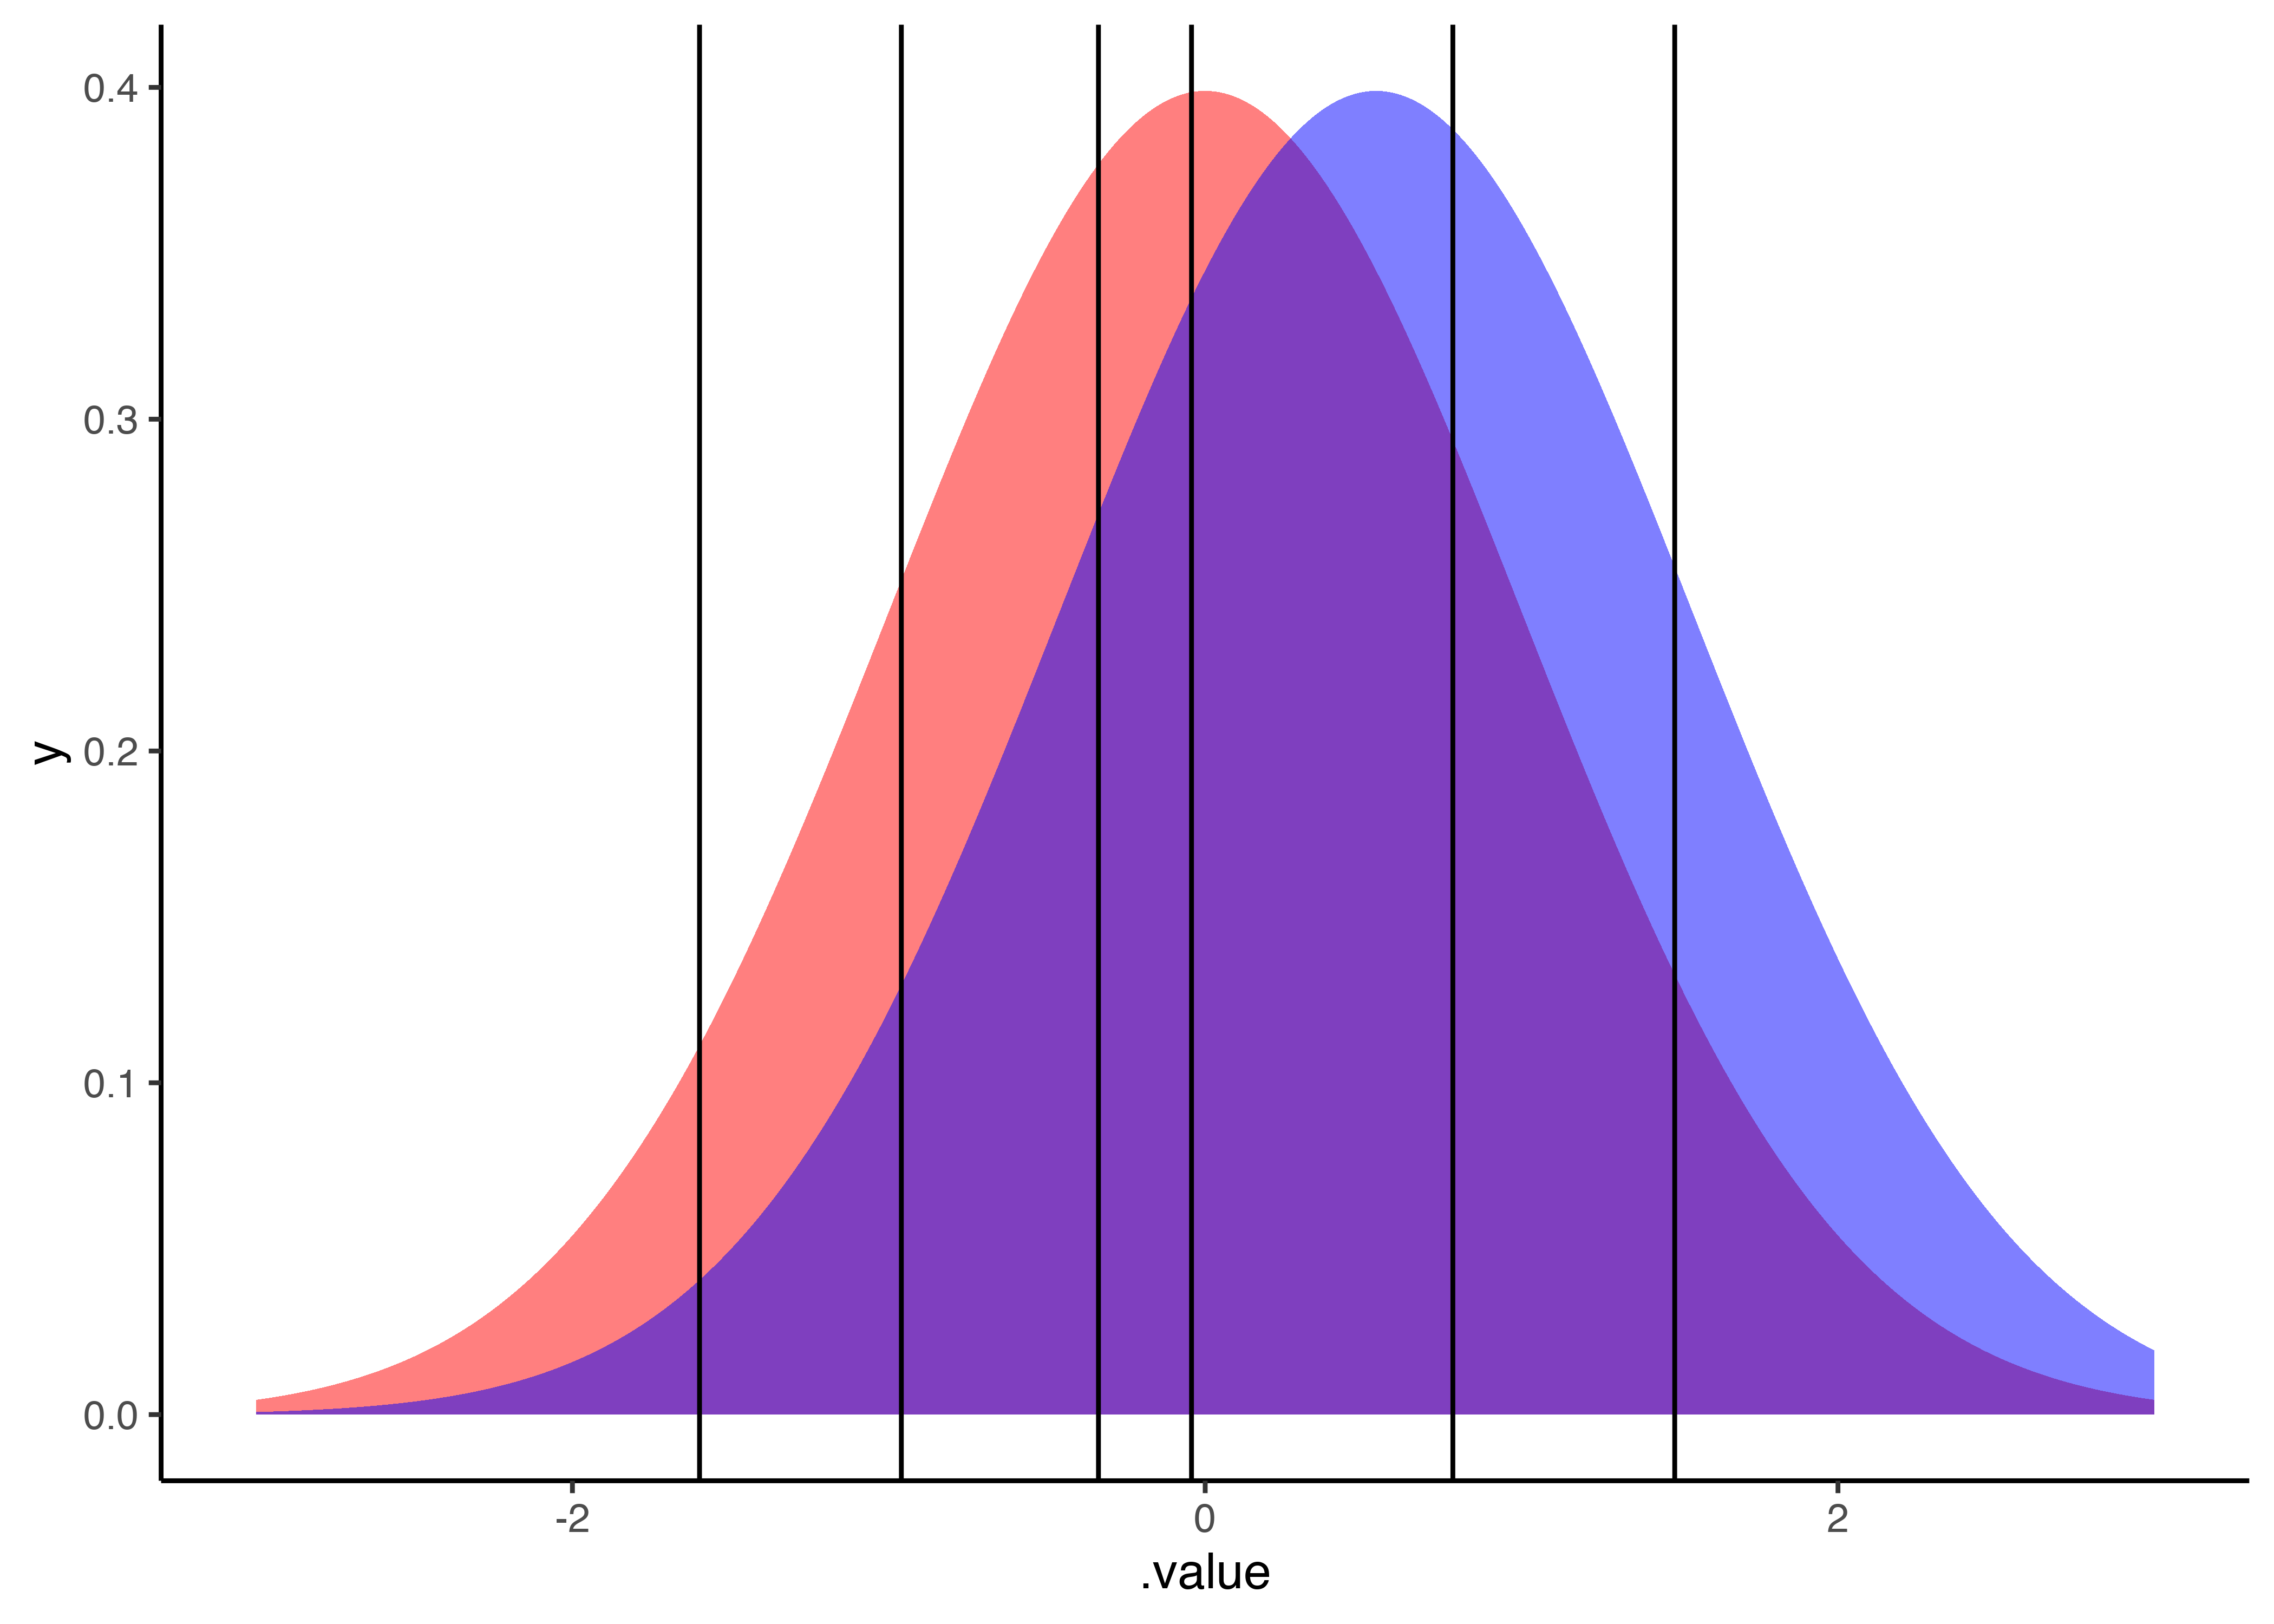 Ordinal regression models to analyze Likert scale data